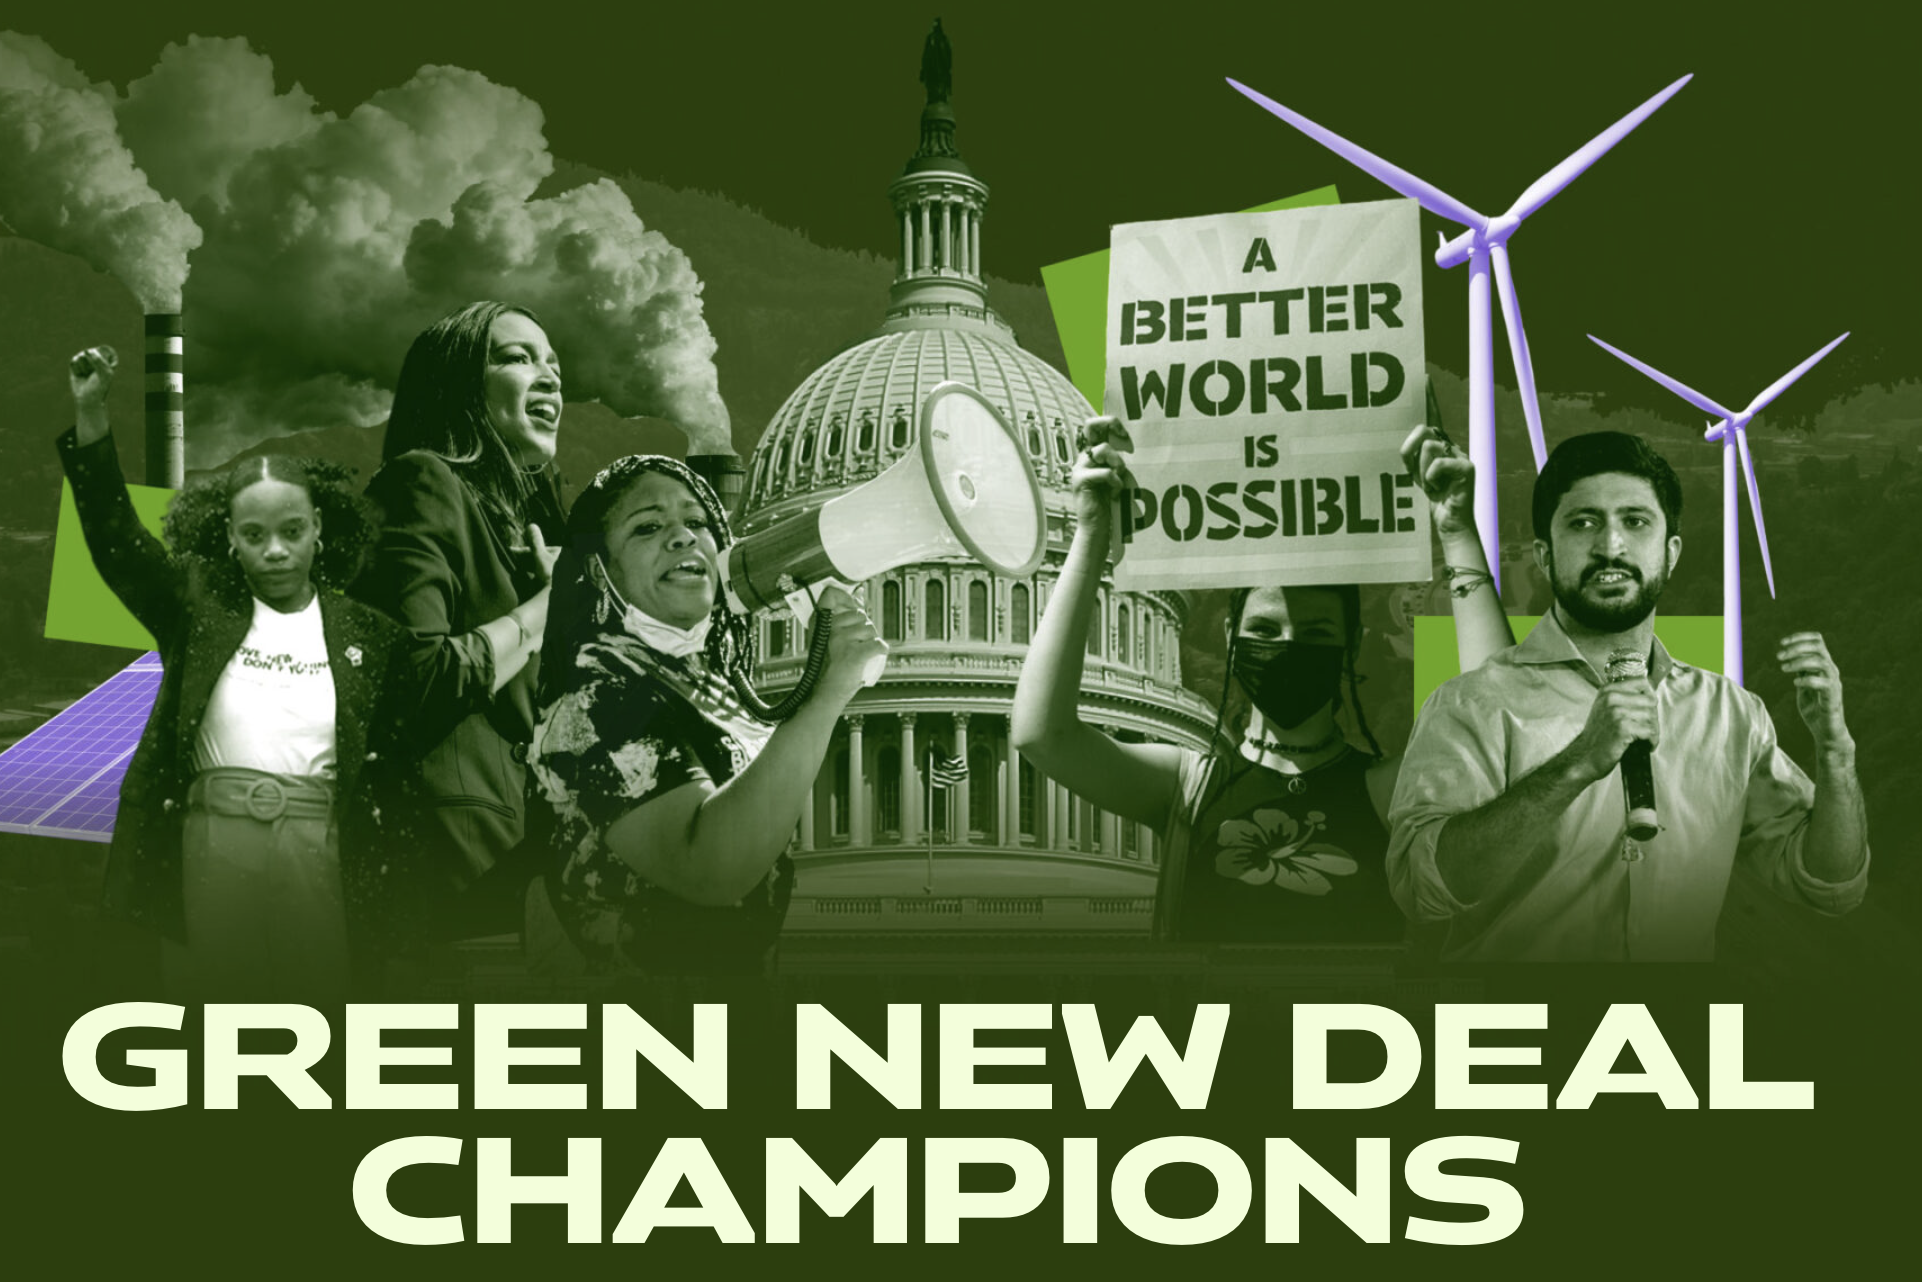 Oil Change U.S. and Progressive Groups Announce ‘Green New Deal Champions’ Pledge